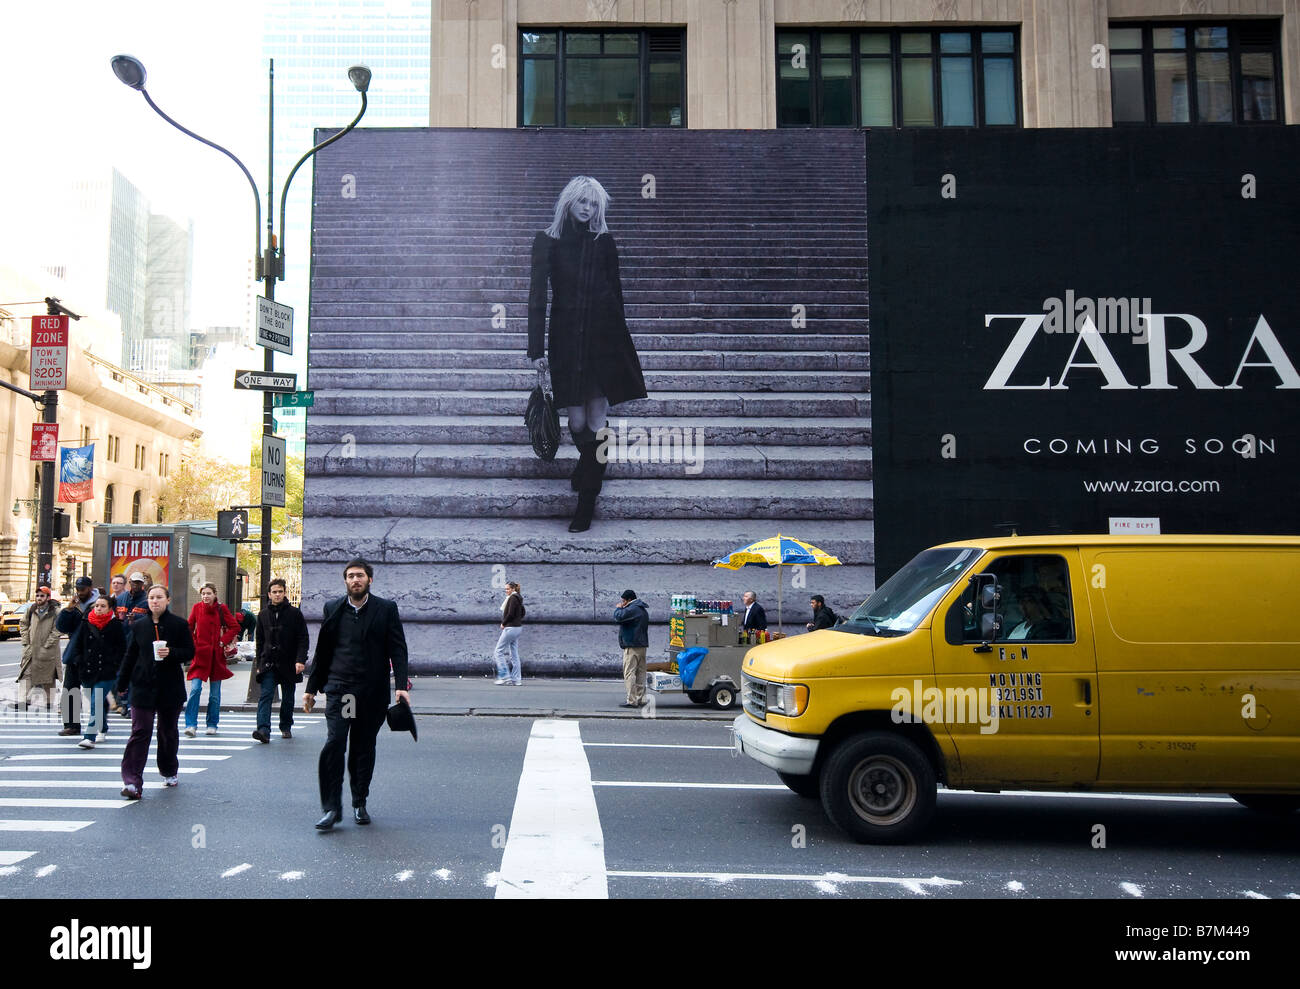 Neue Zara Shop Werbung auf Fifth Avenue, New York, USA, November 2008  Stockfotografie - Alamy